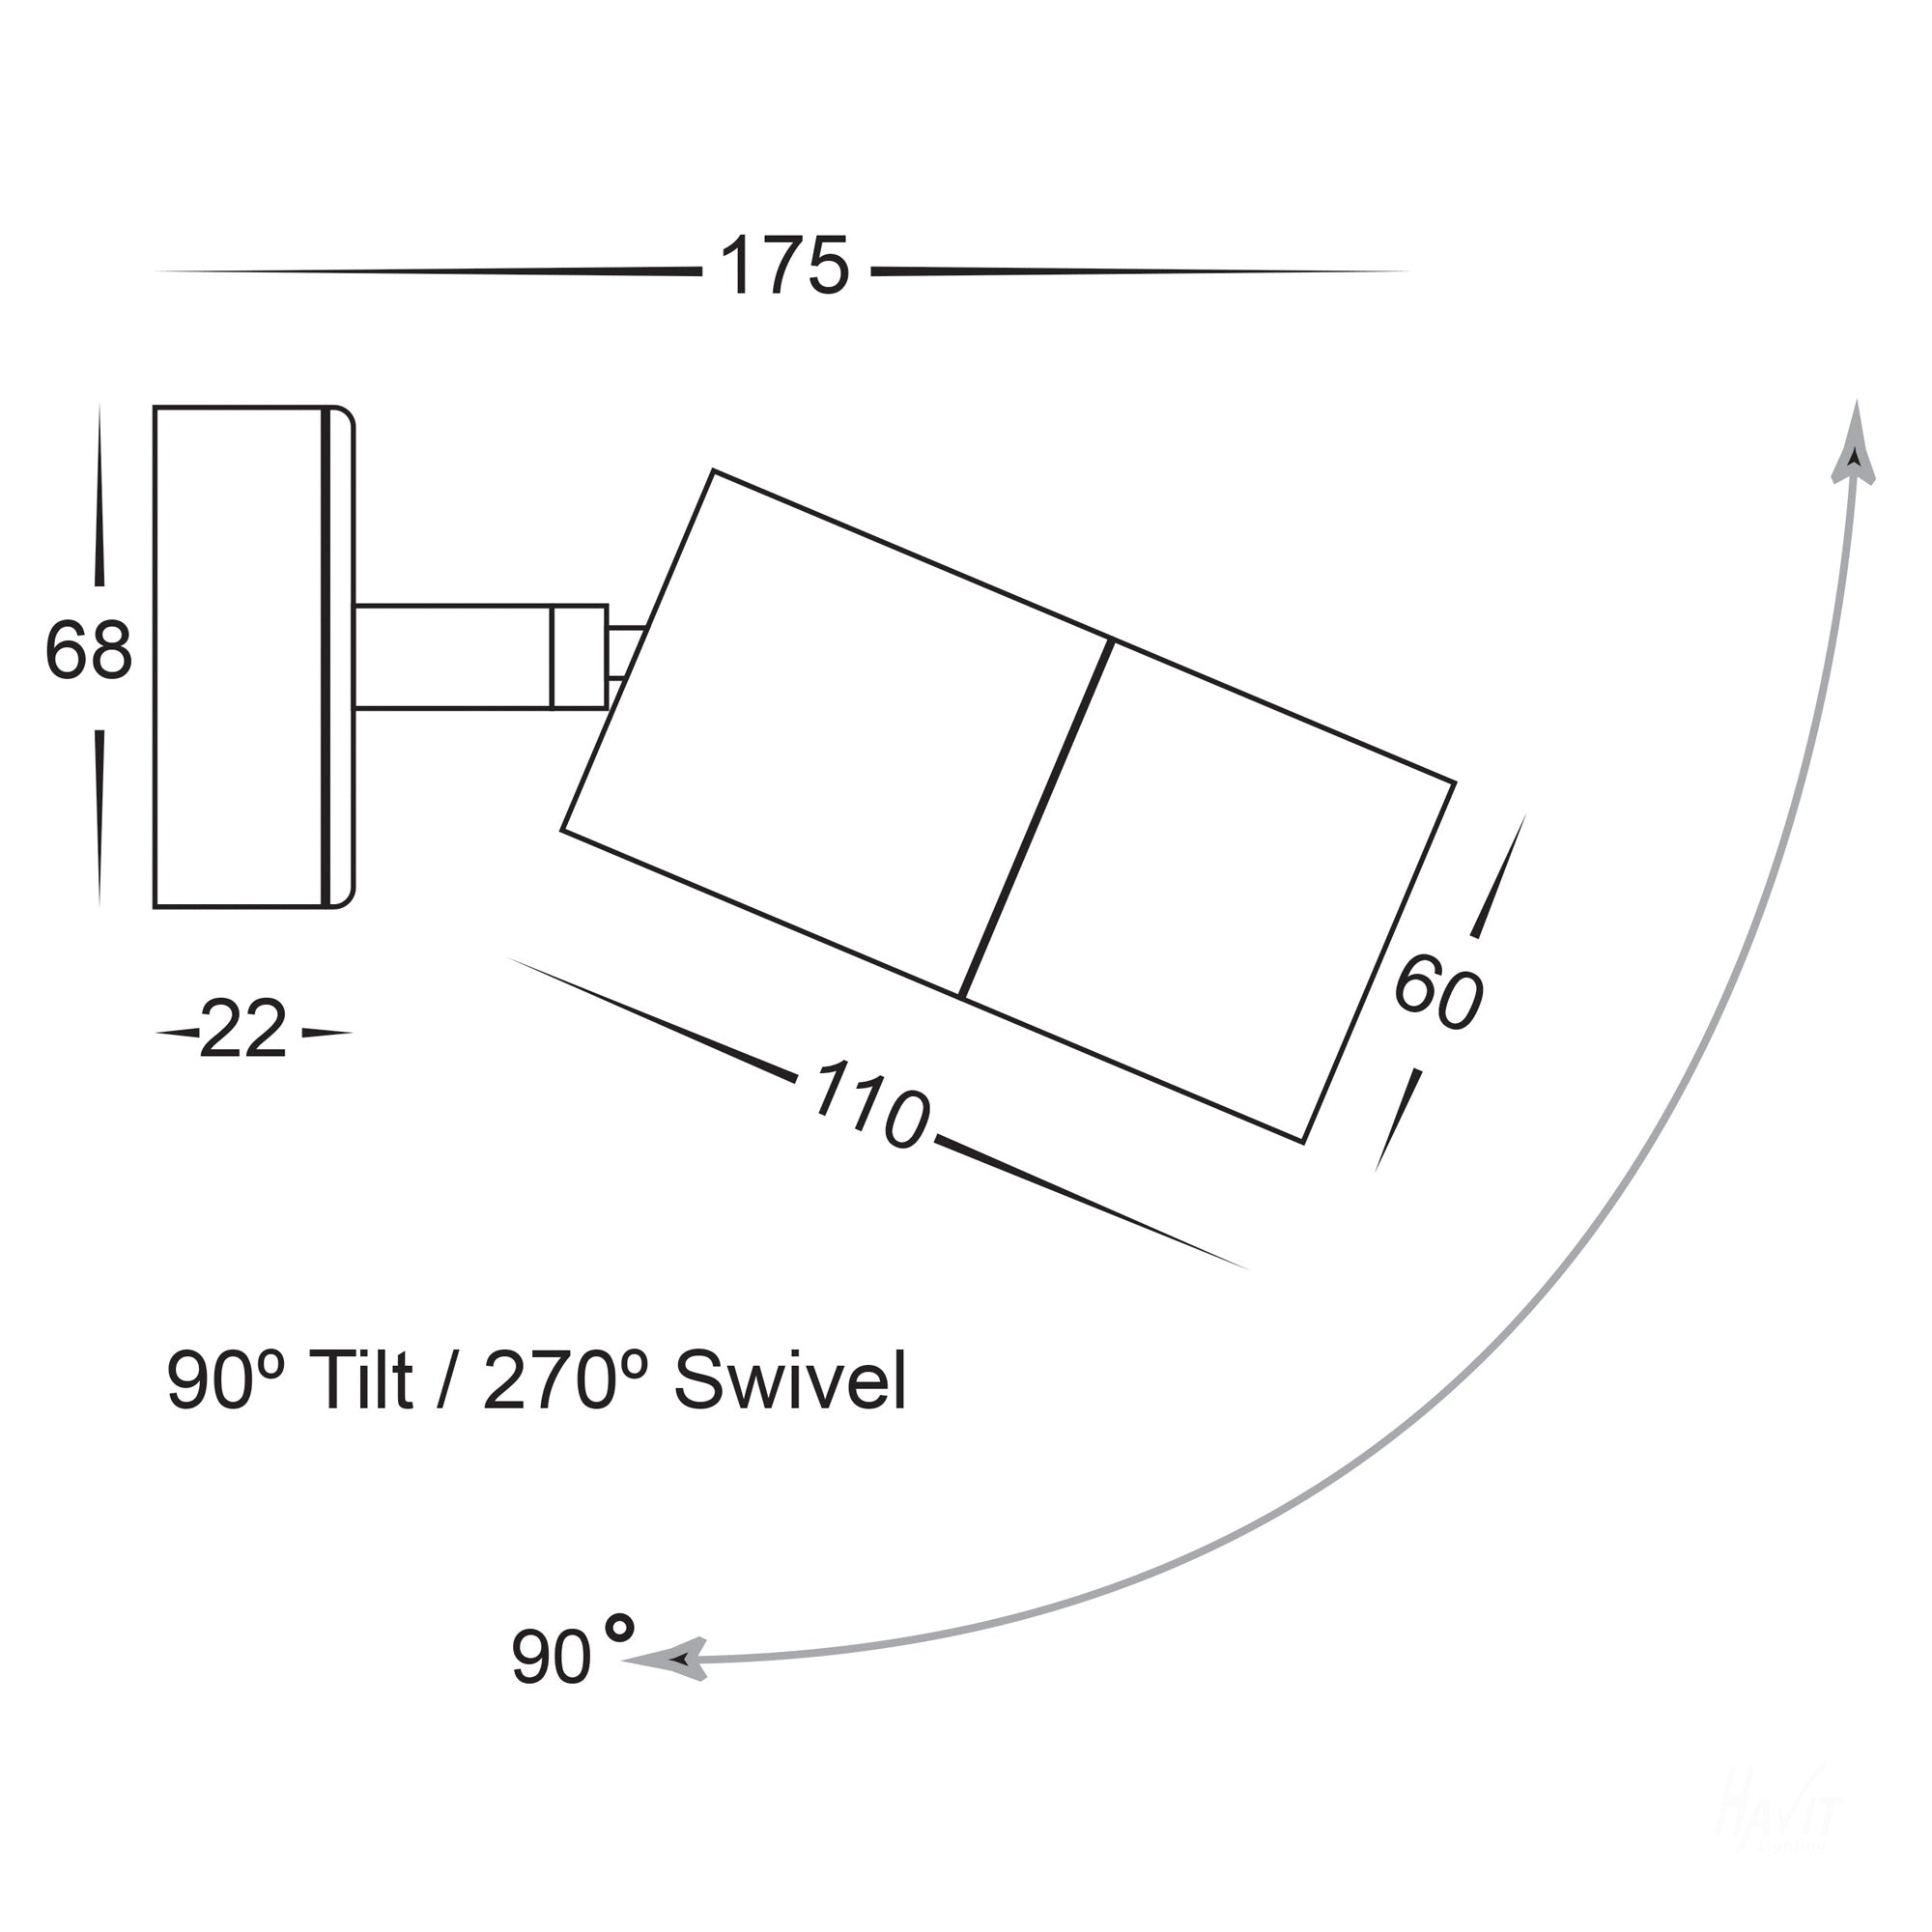 HV1225T-HV1227T - Tivah Black TRI Colour Single Adjustable Wall Pillar Lights